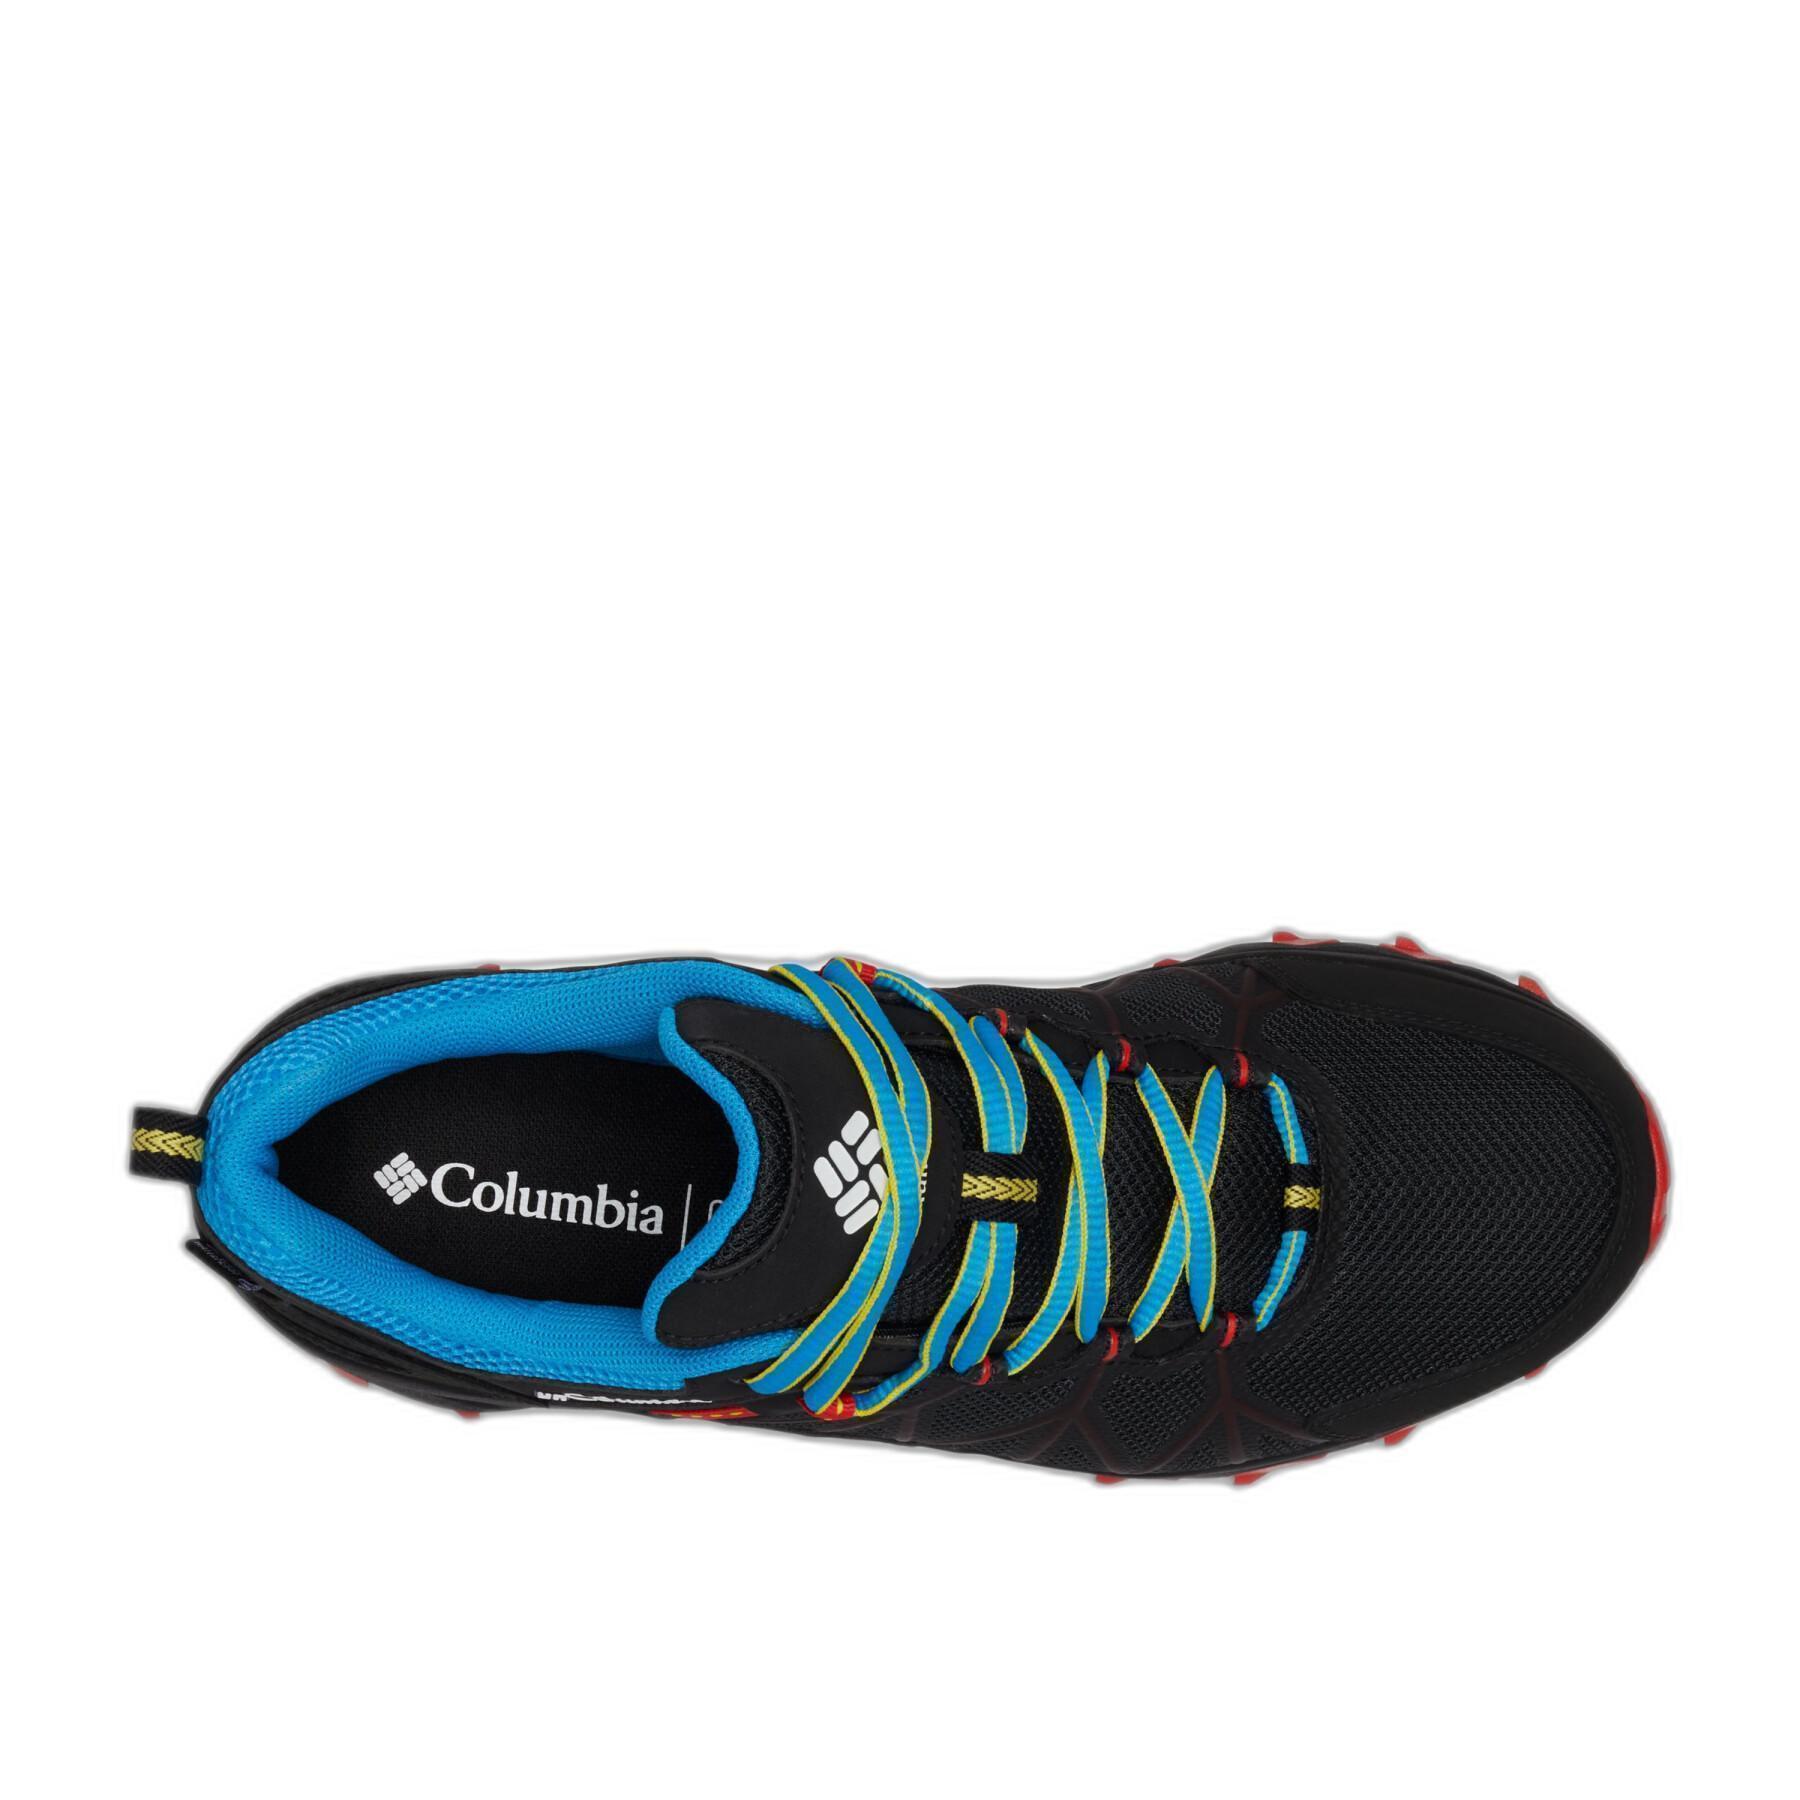 Columbia Peakfreak™ II Outdry™ hiking boots